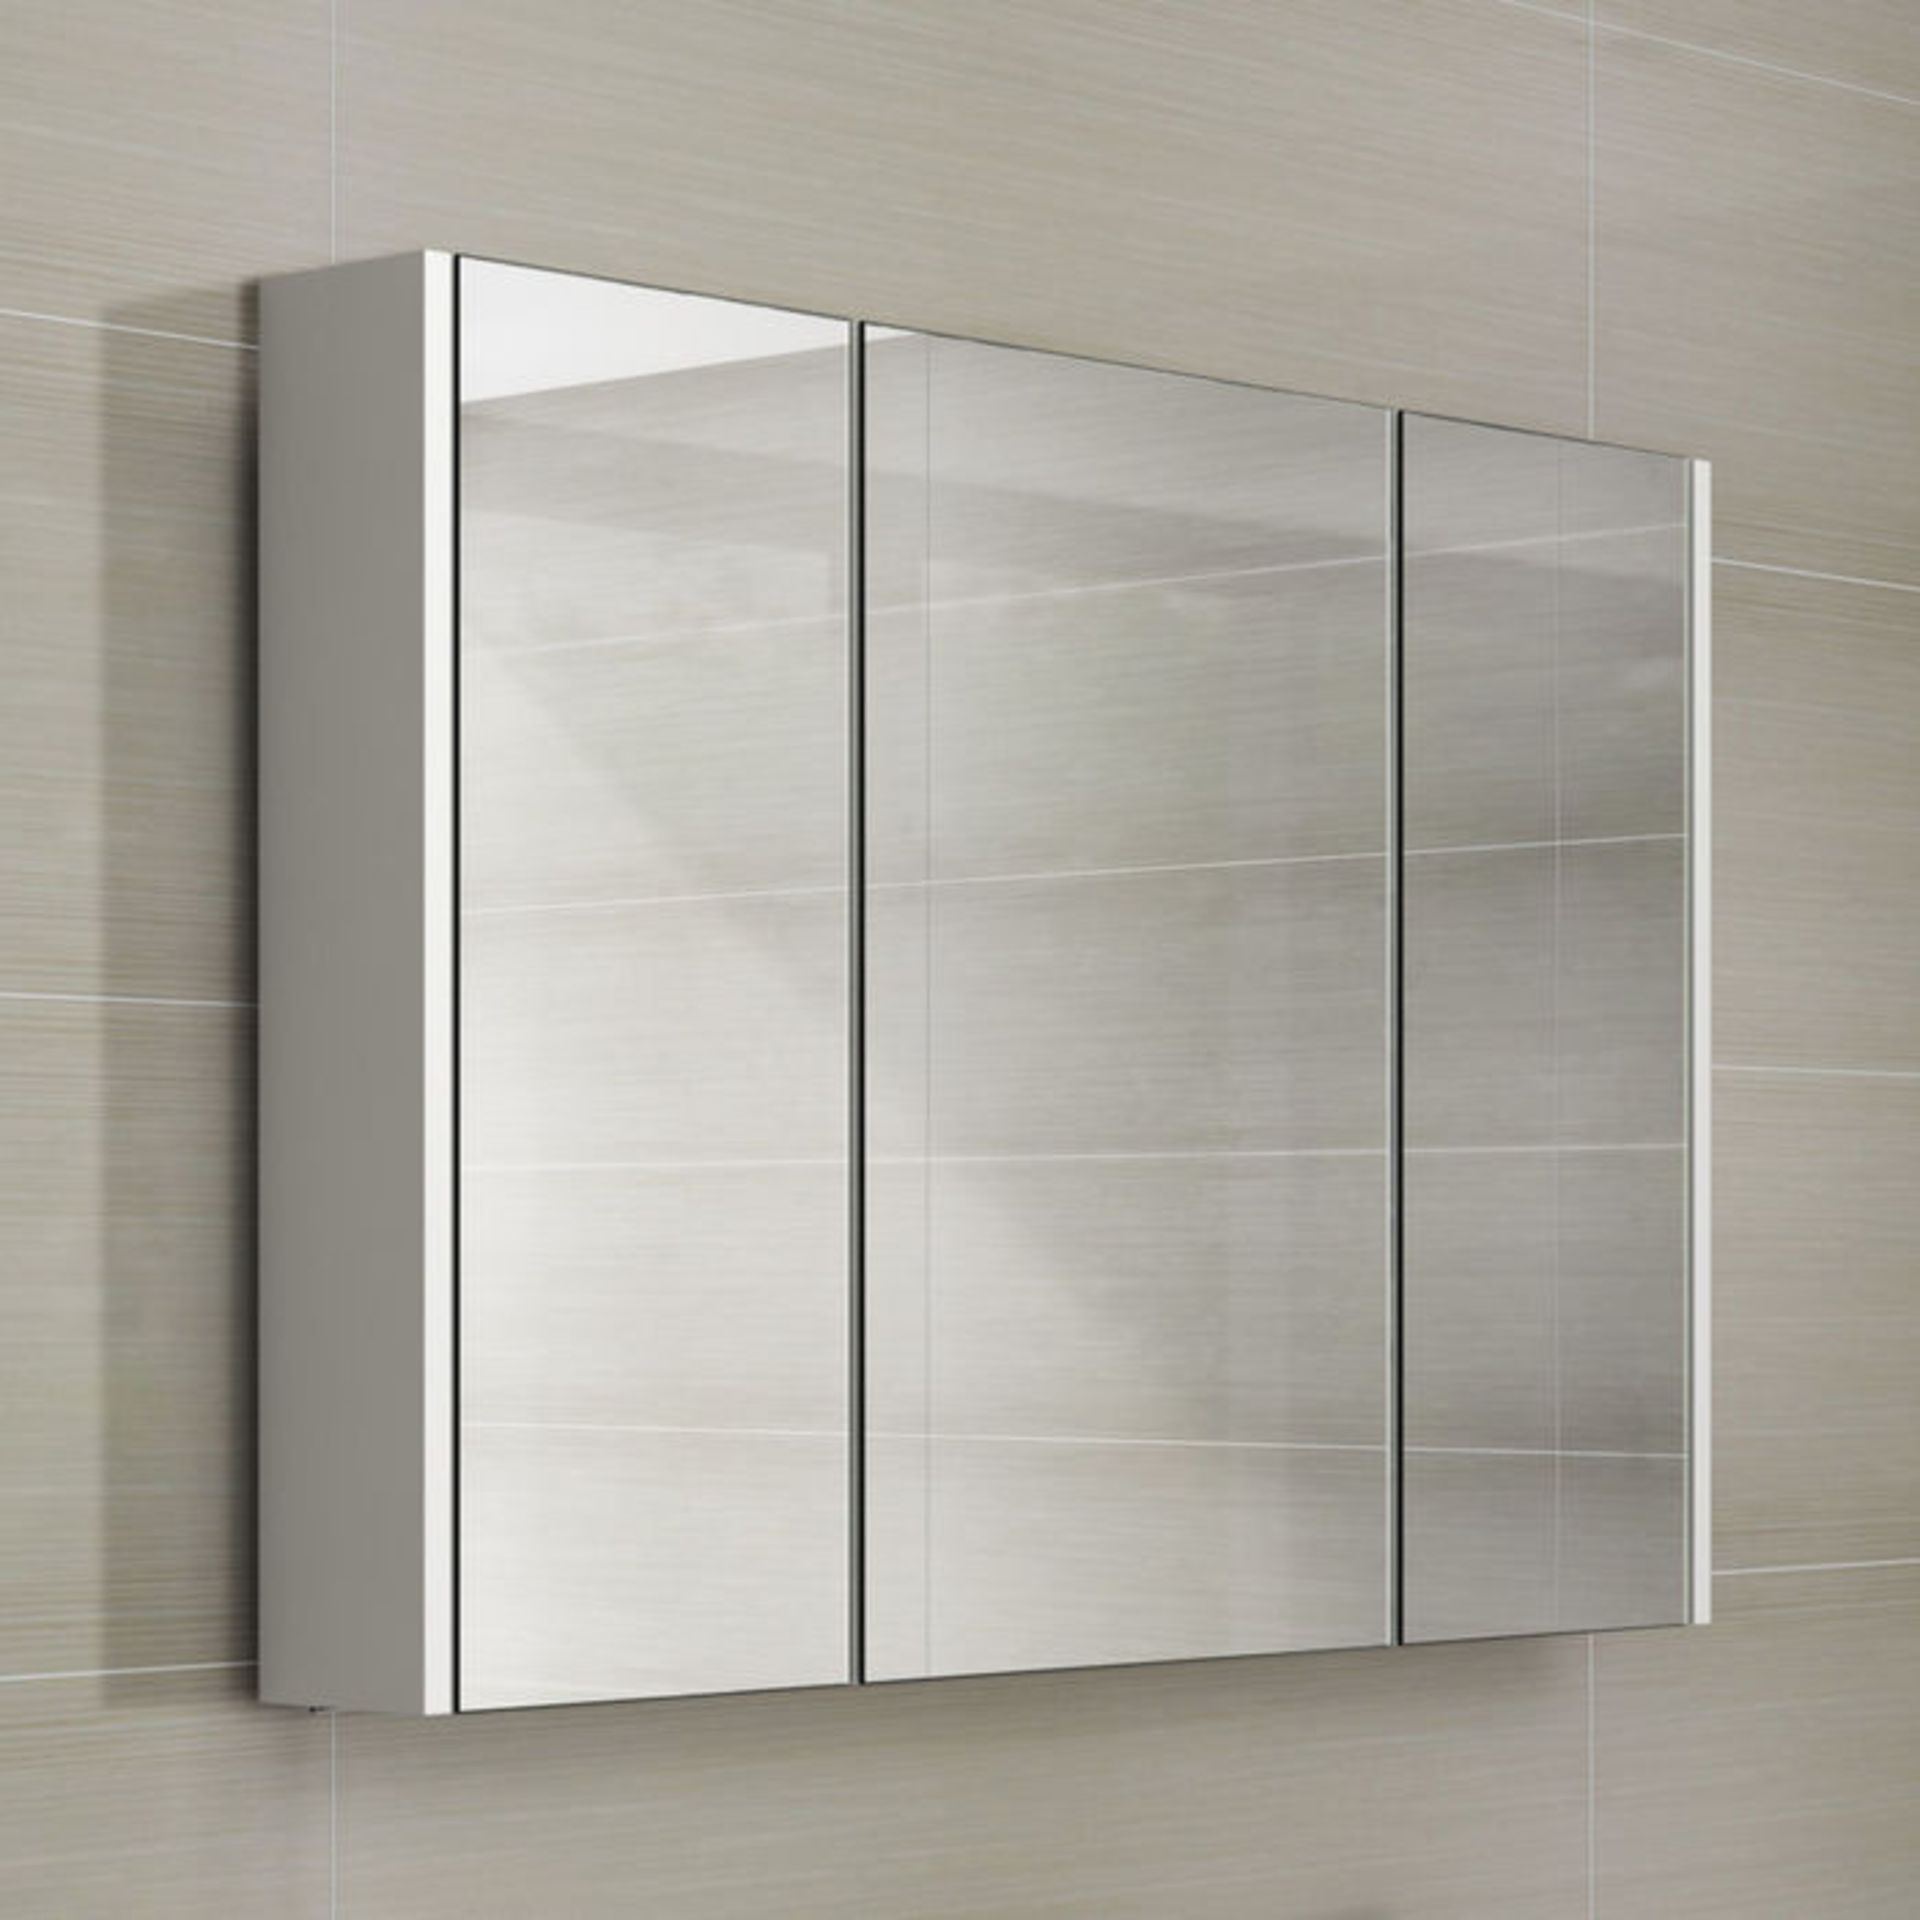 (TA207) 900mm Gloss White Triple Door Mirror Cabinet. RRP £299.99. Sleek contemporary design